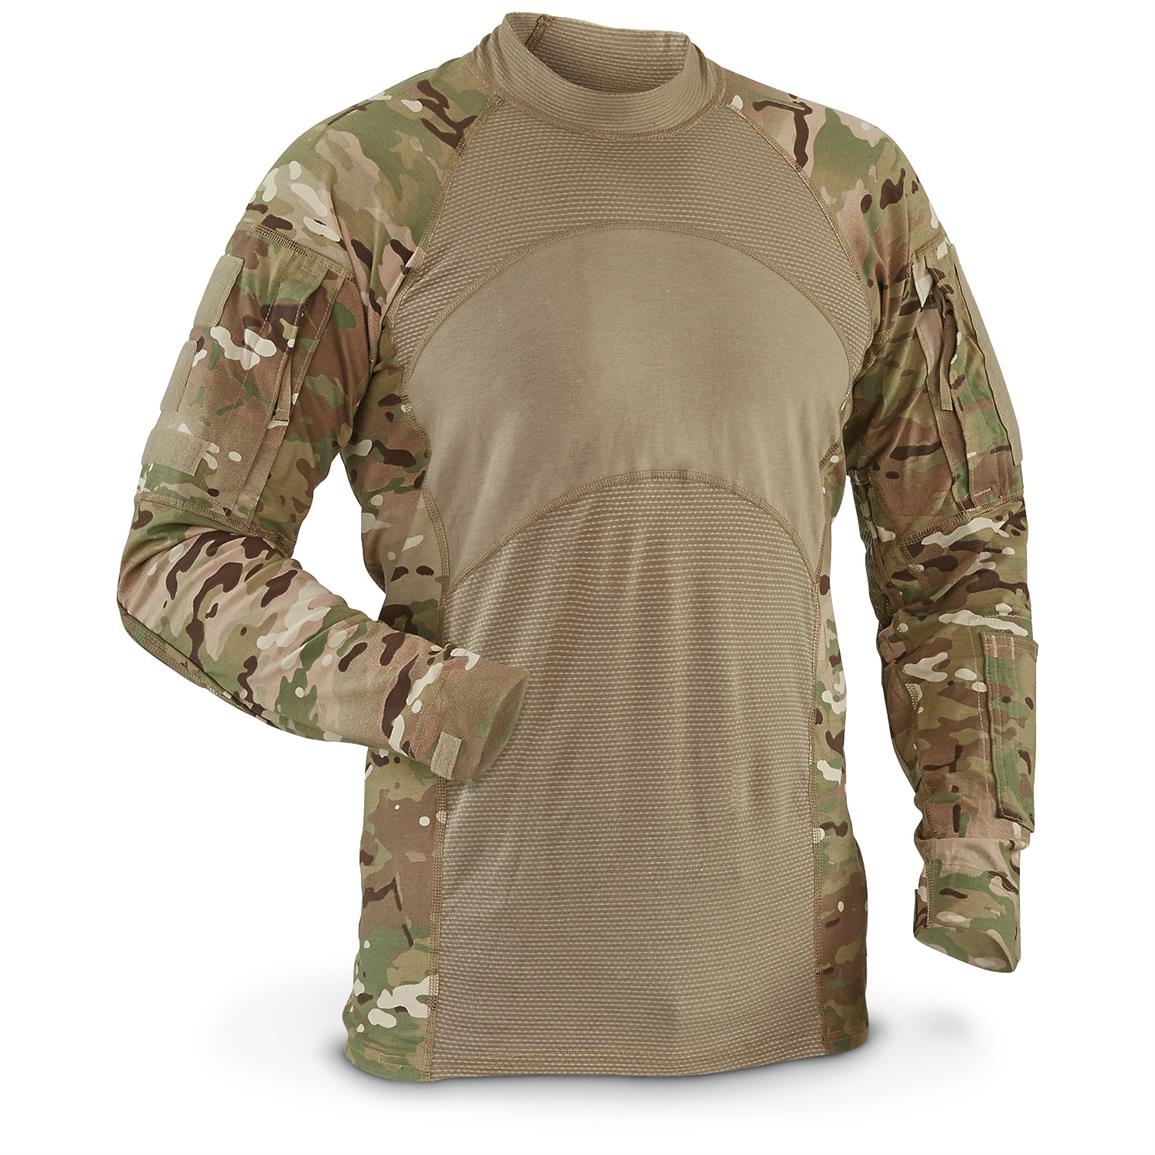 Army Compression Shirt - Army Military